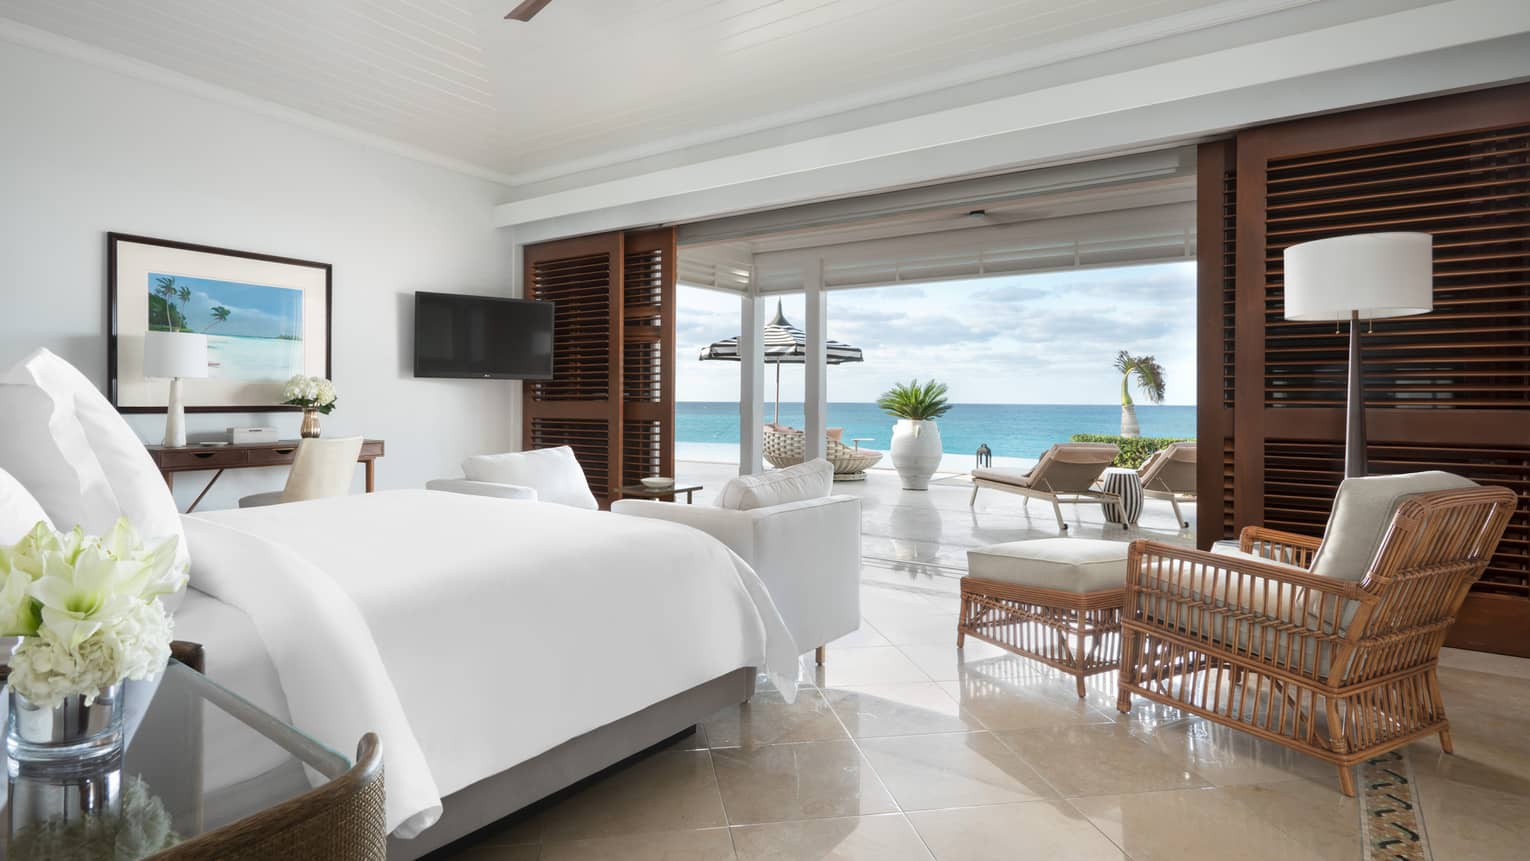 Beachfront Villa Residence Master Bedroom overlooking the ocean